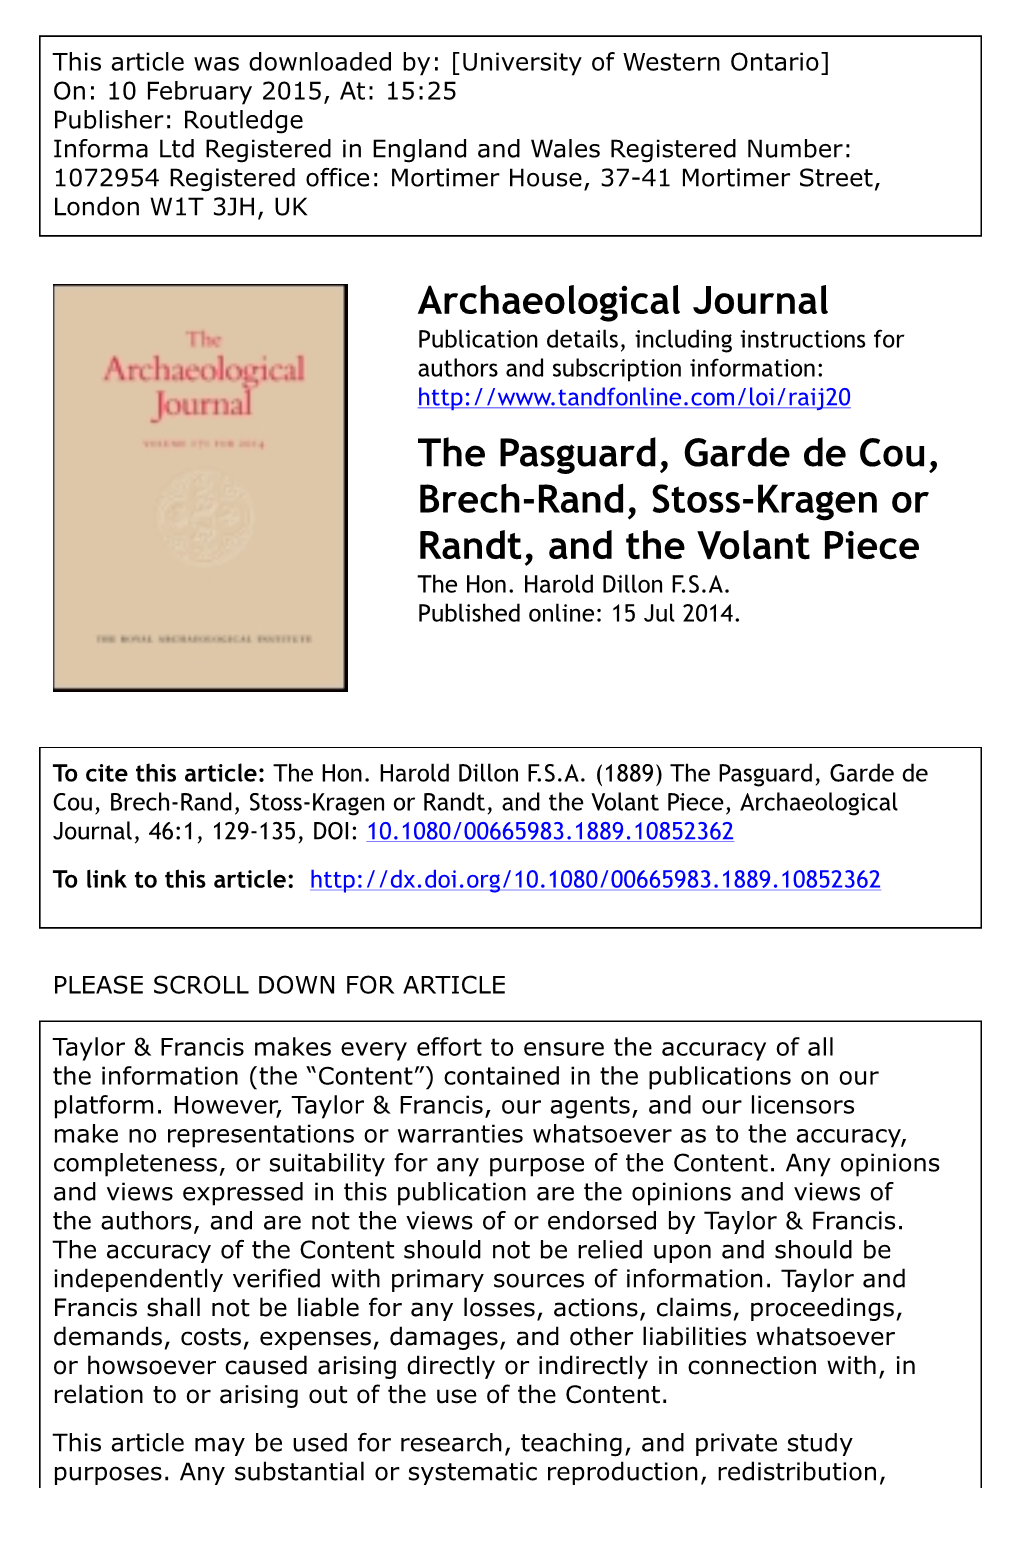 Archaeological Journal the Pasguard, Garde De Cou, Brech